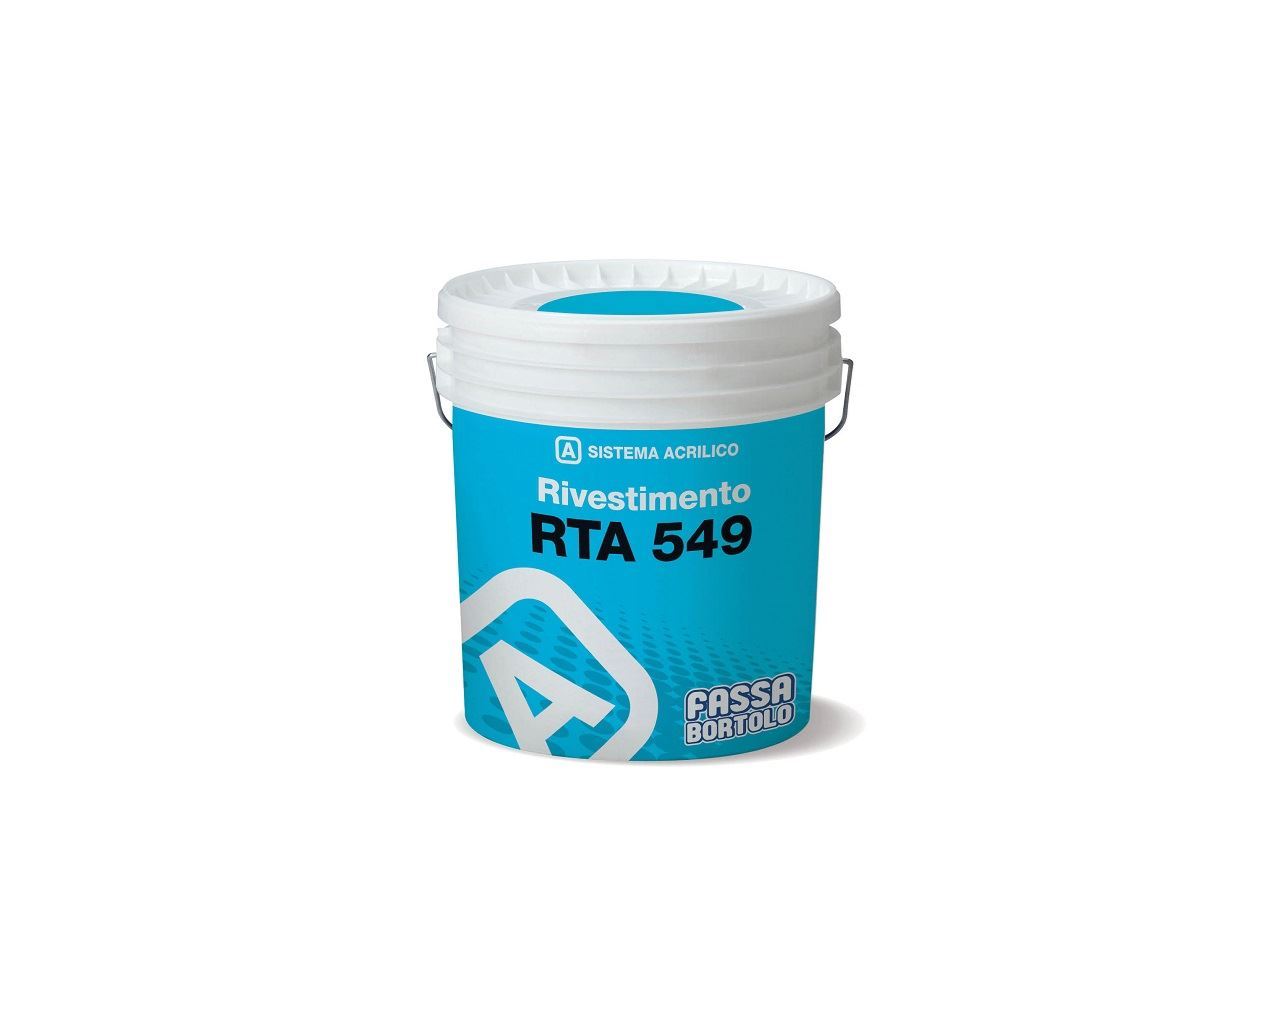 RTA 549 - rivestimento acrilico in pasta idrorepellente gr.1 antimuffa antialga